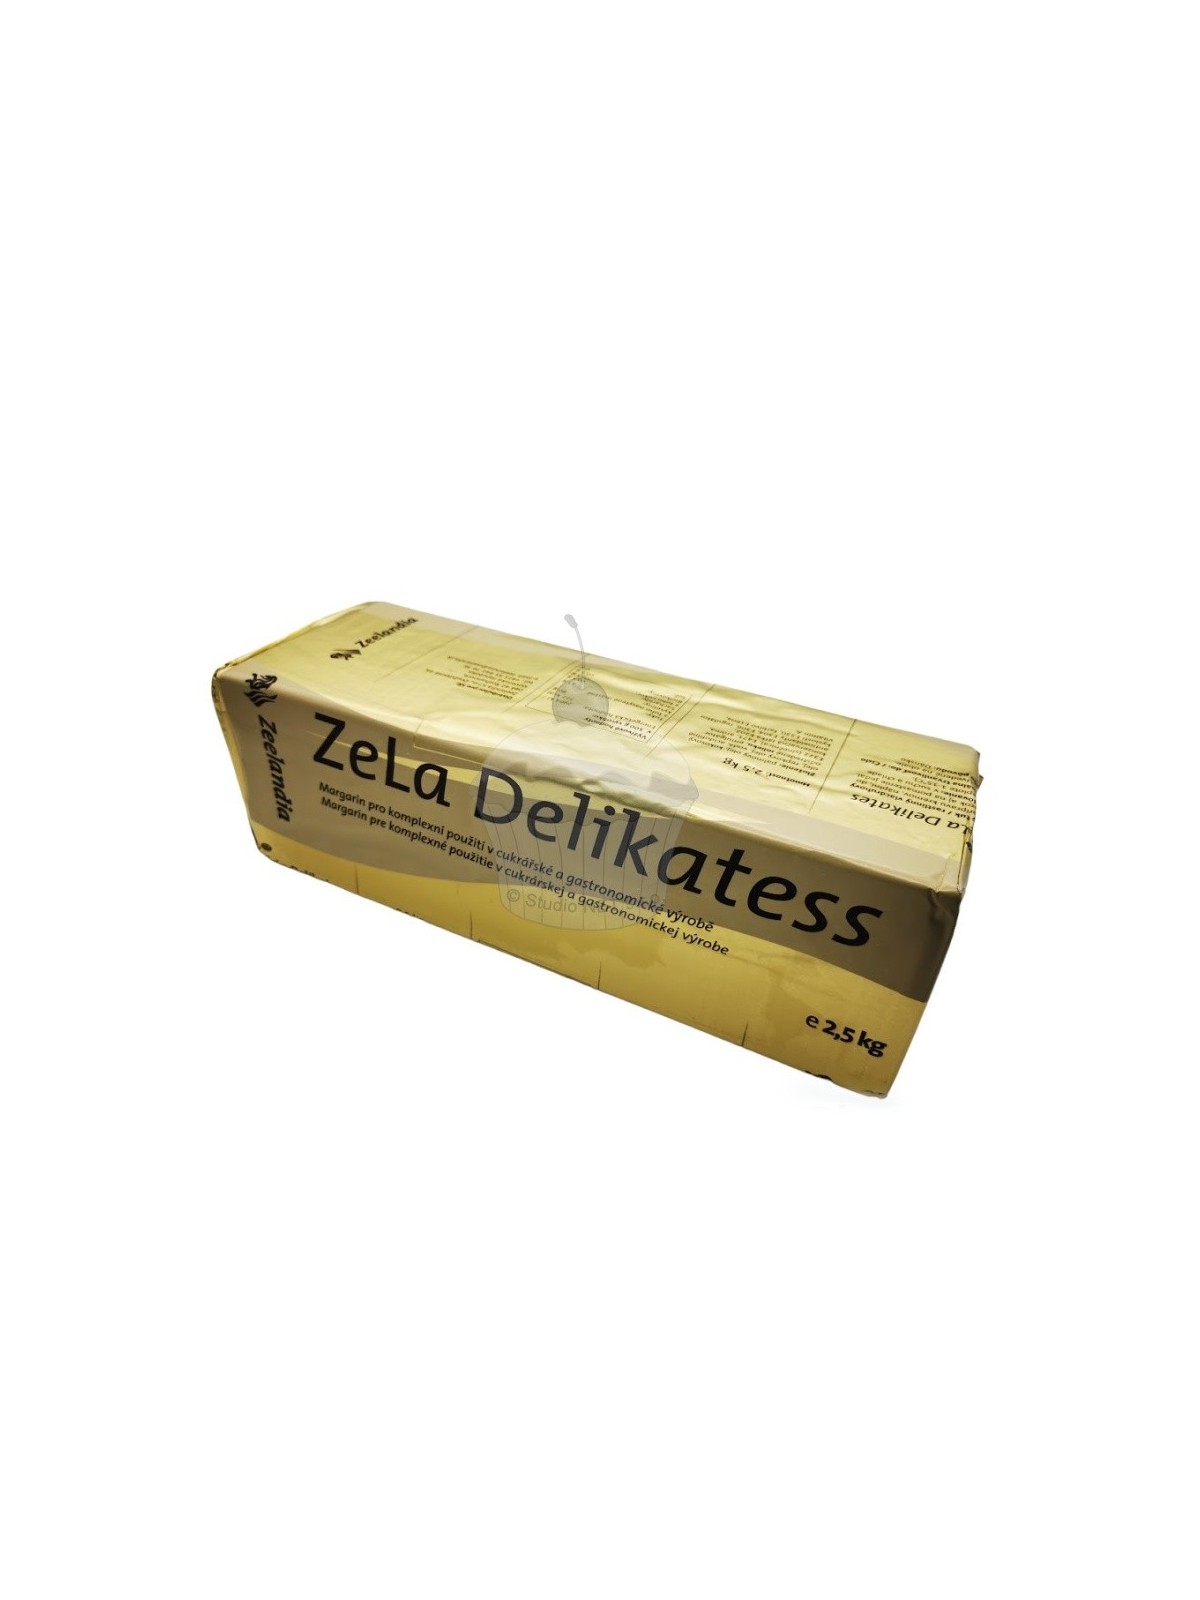 ZeLa Delikatess - margaryna - 2,5kg